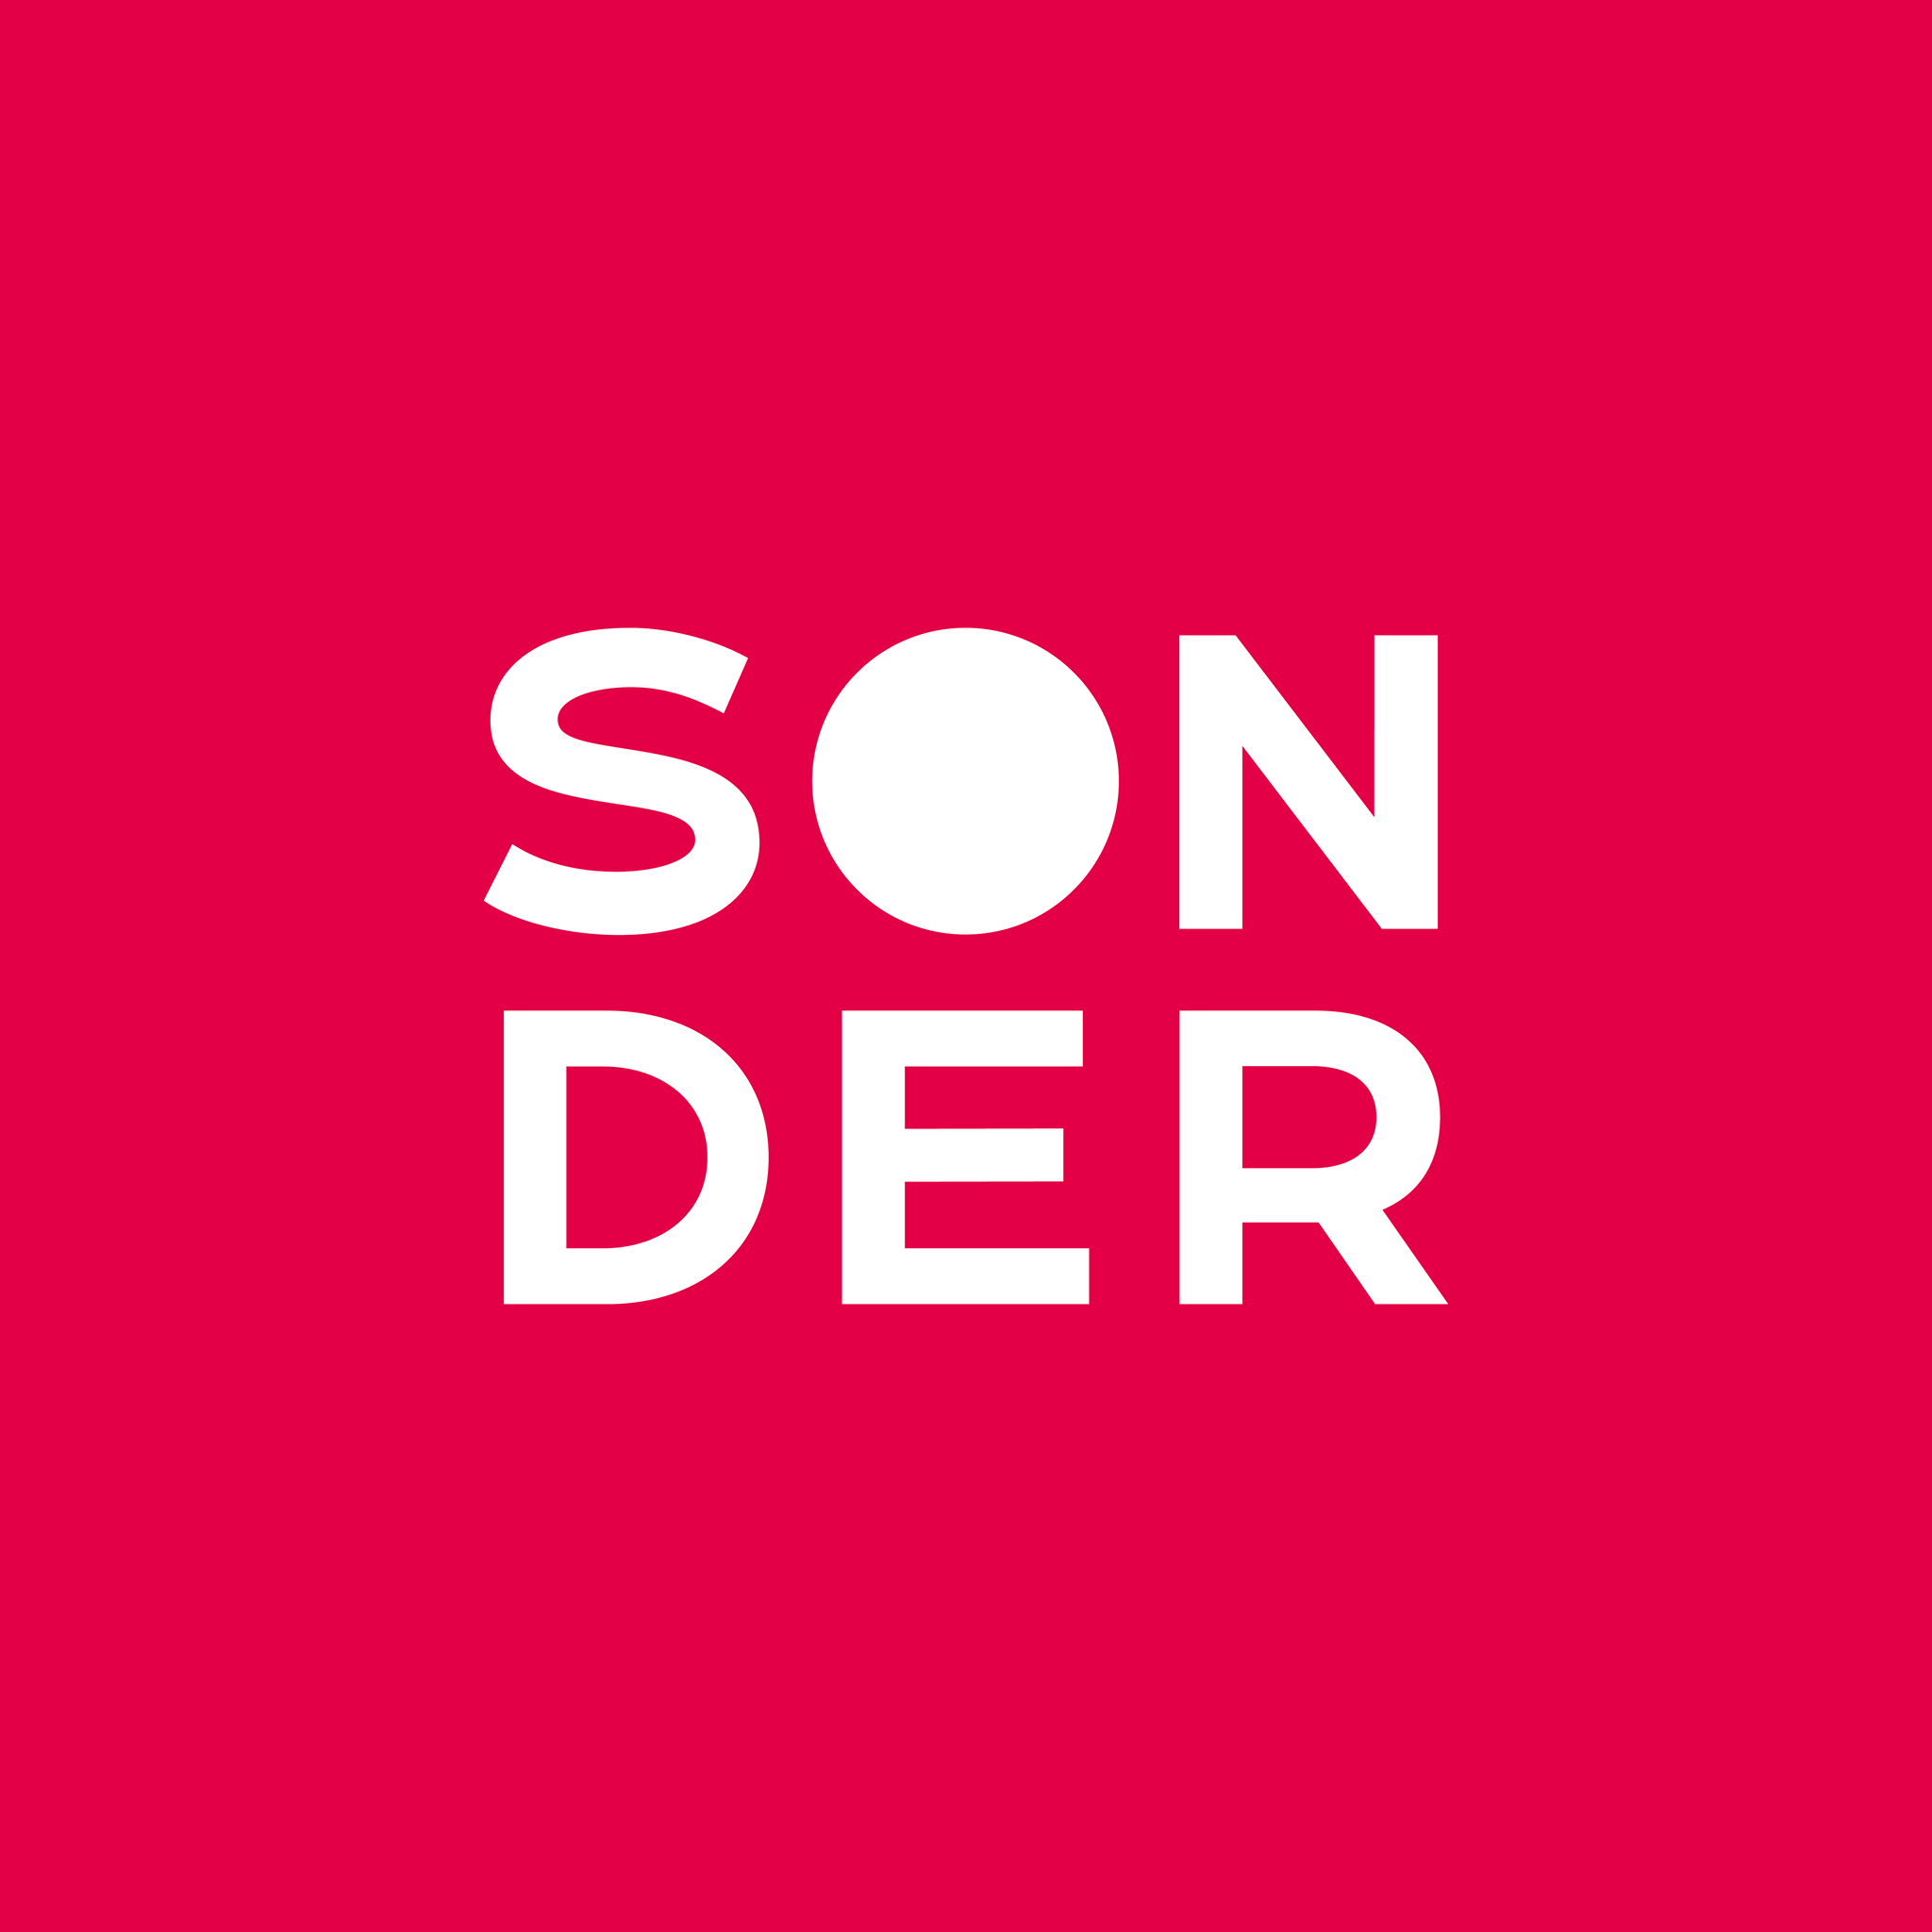 Sonder Digital Marketing profile on Qualified.One